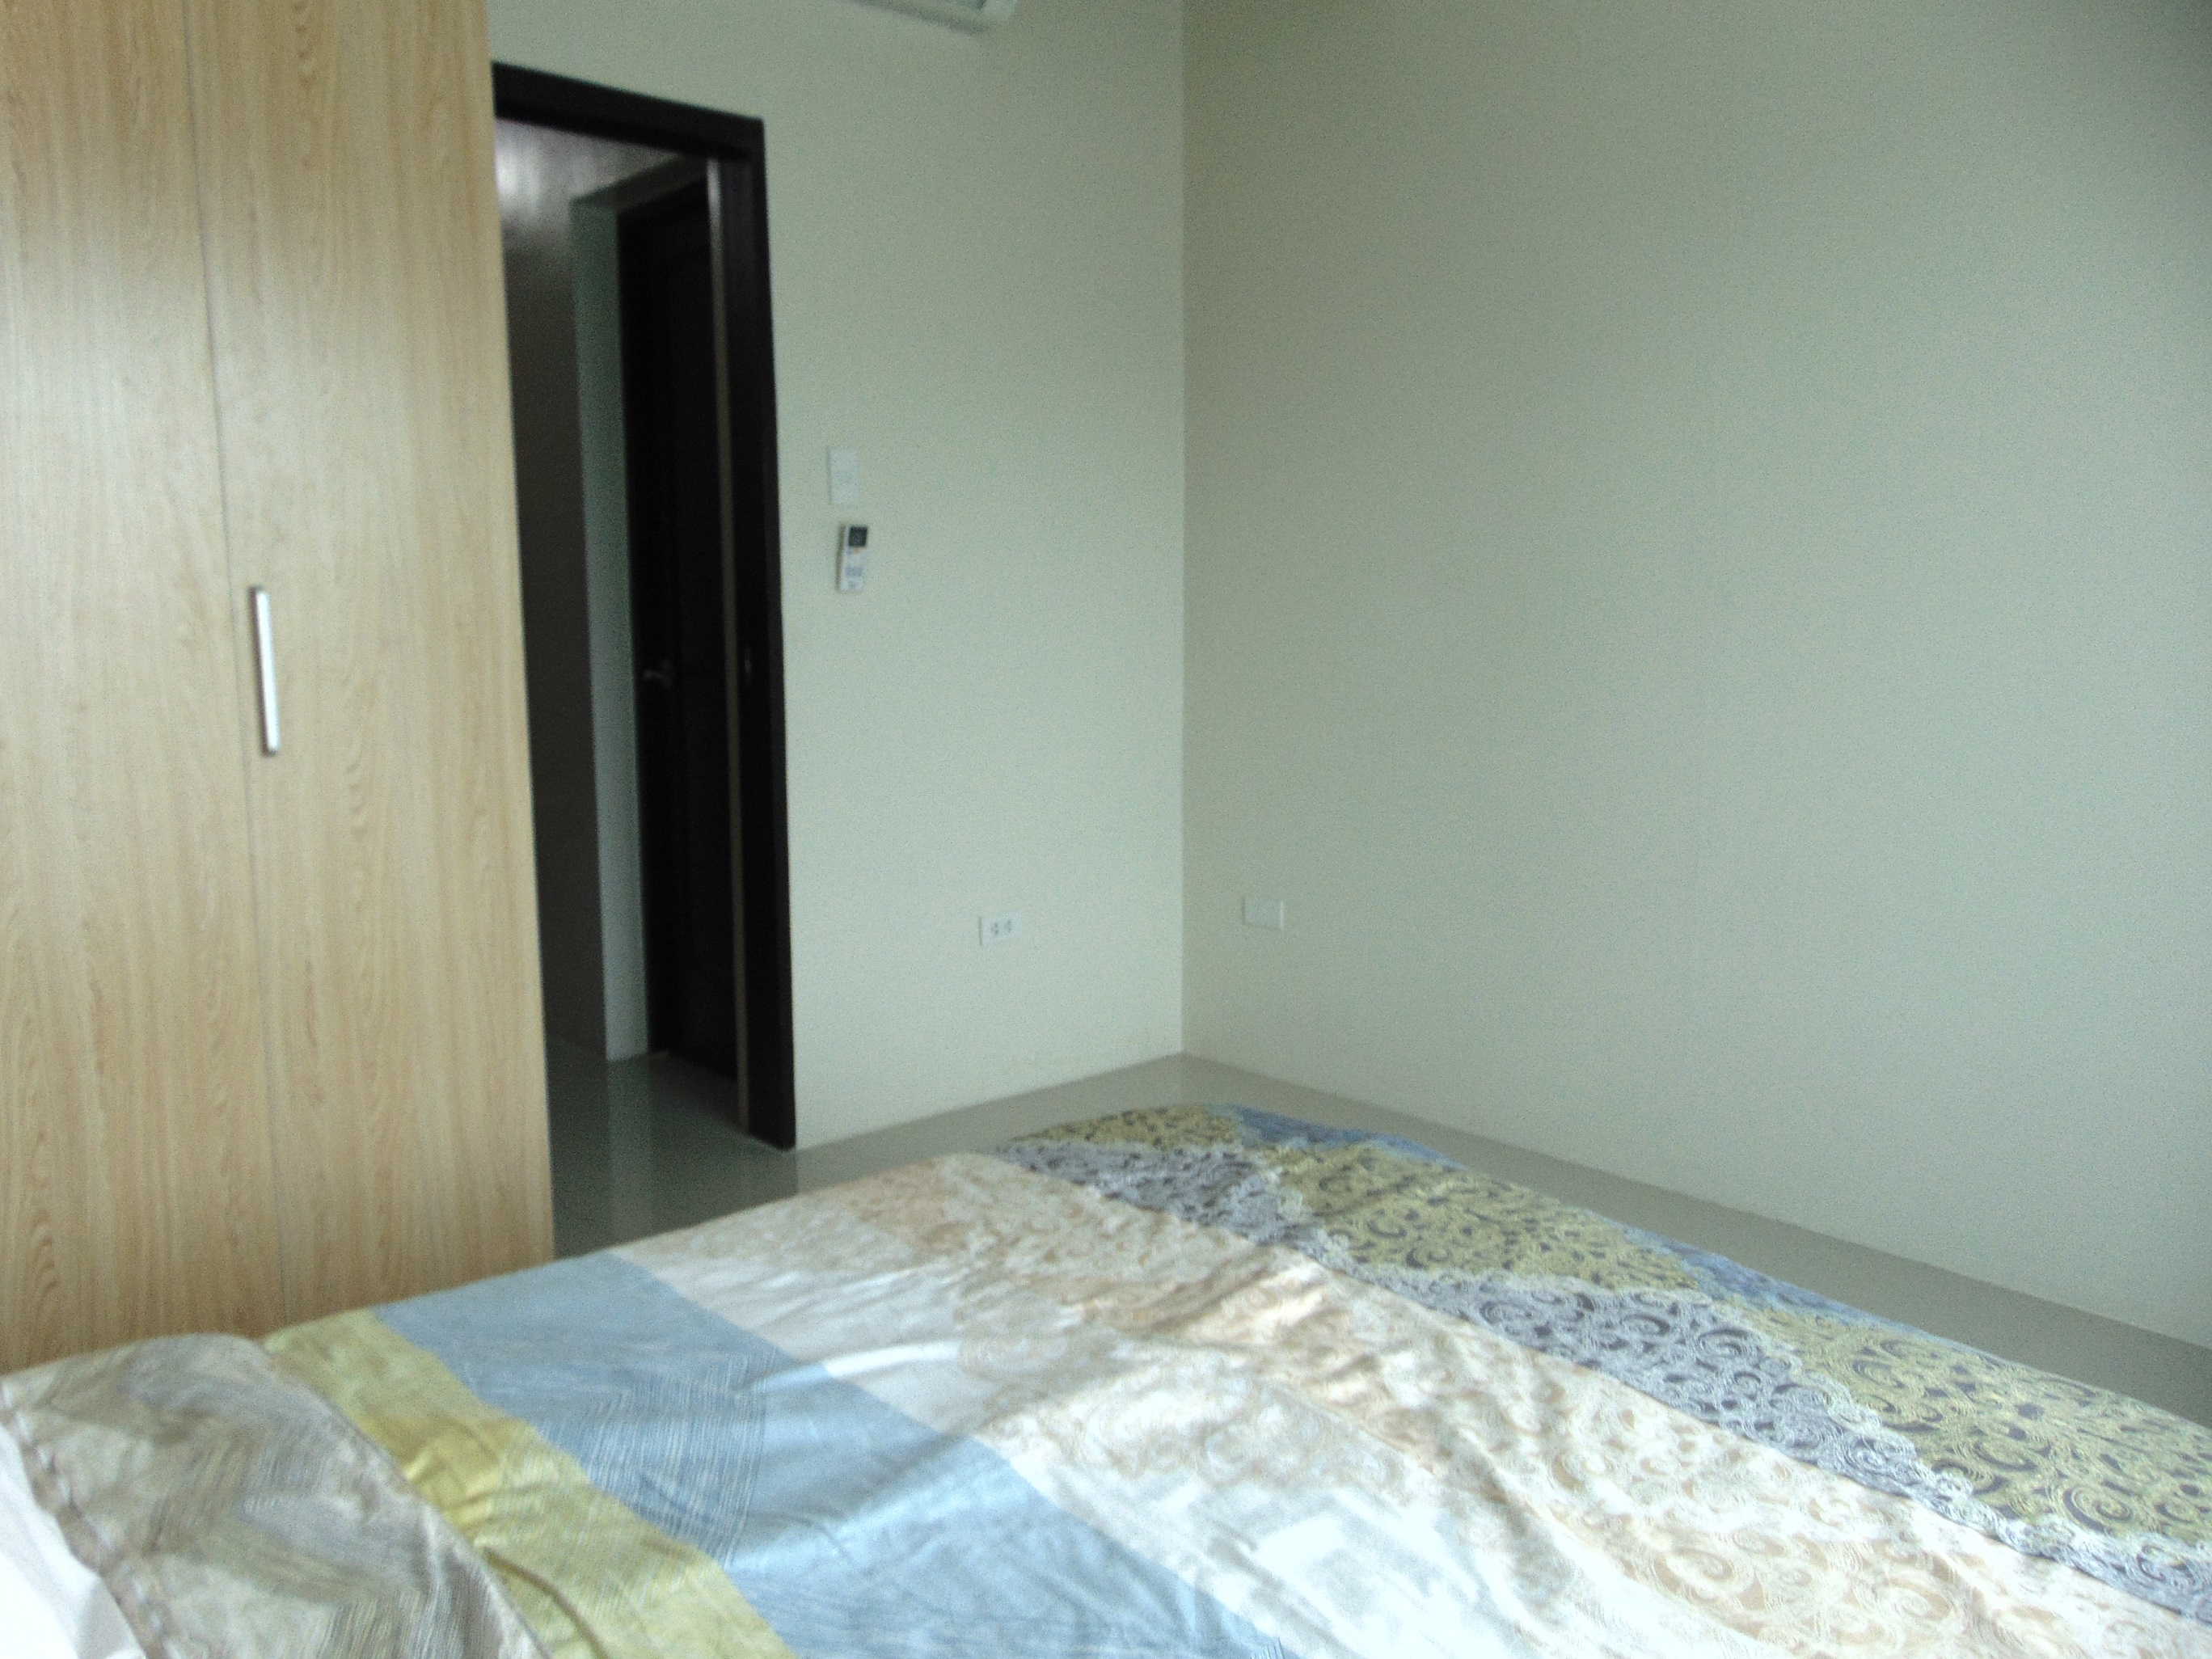 1-bedroom-condominium-in-banawa-cebu-city